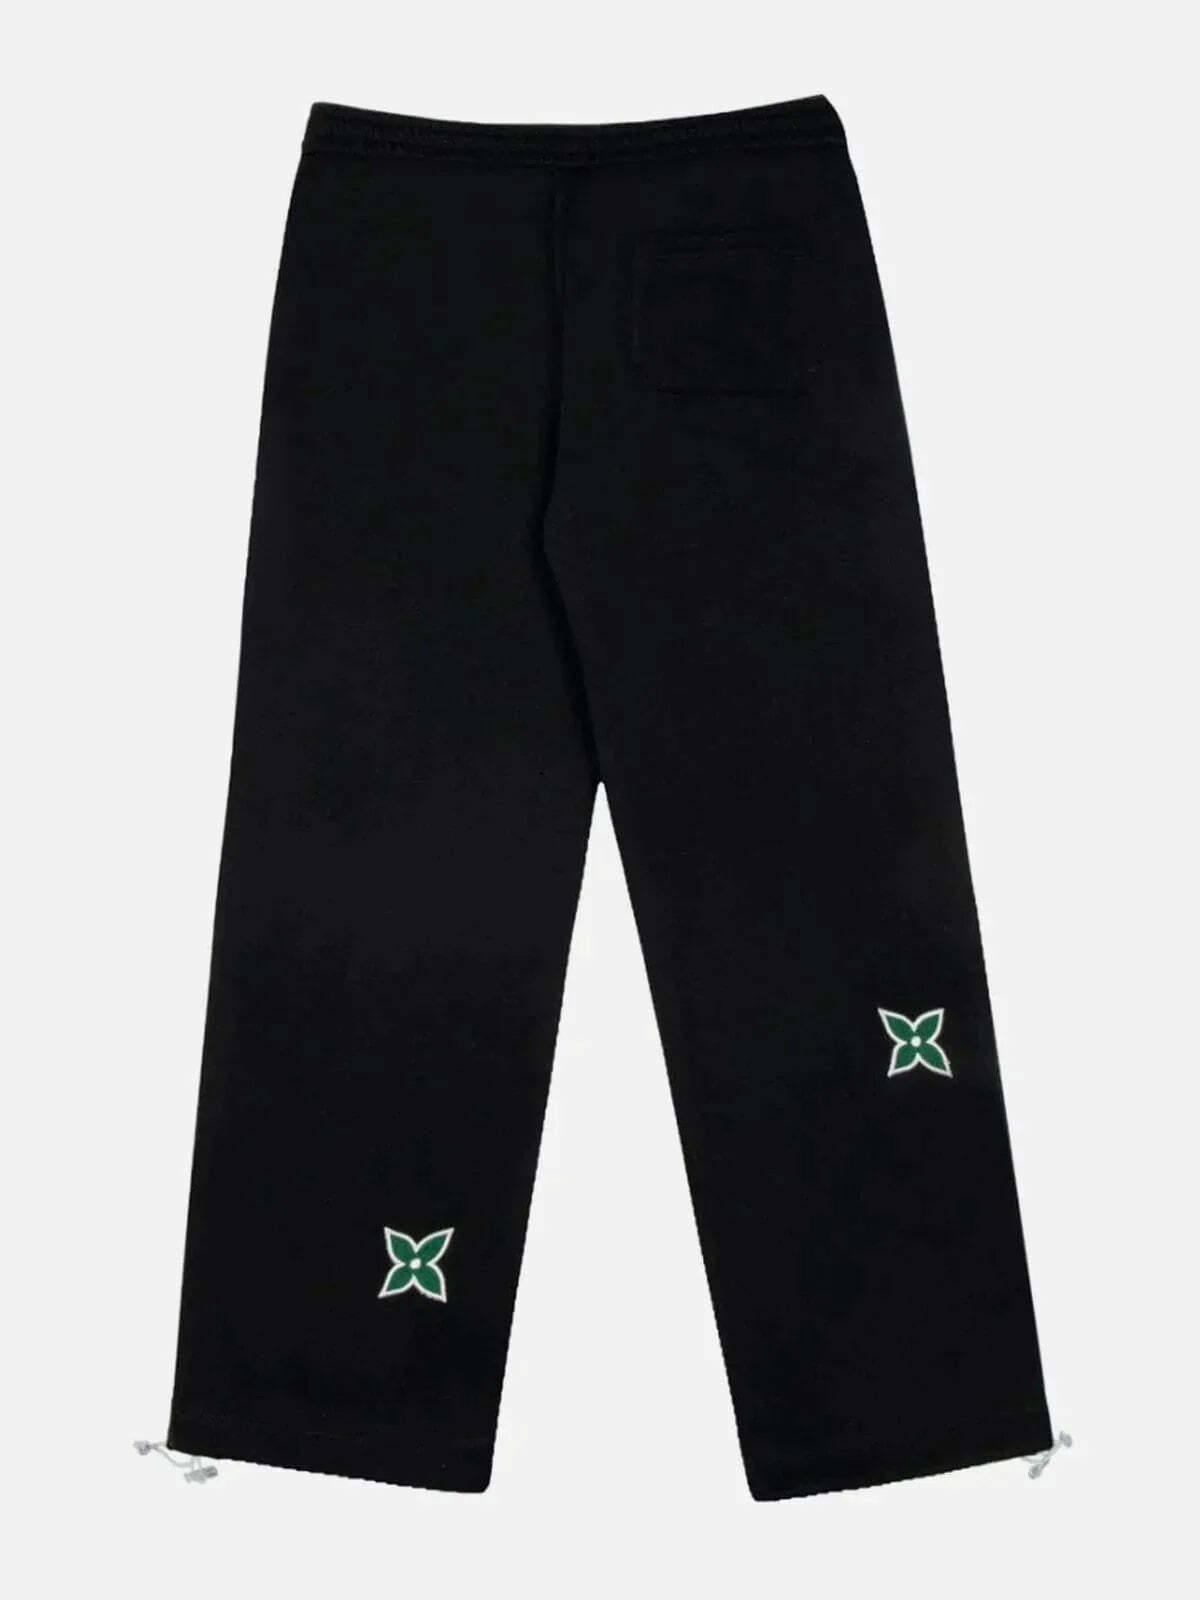 embroidered drawstring pants edgy & stylish streetwear 1266